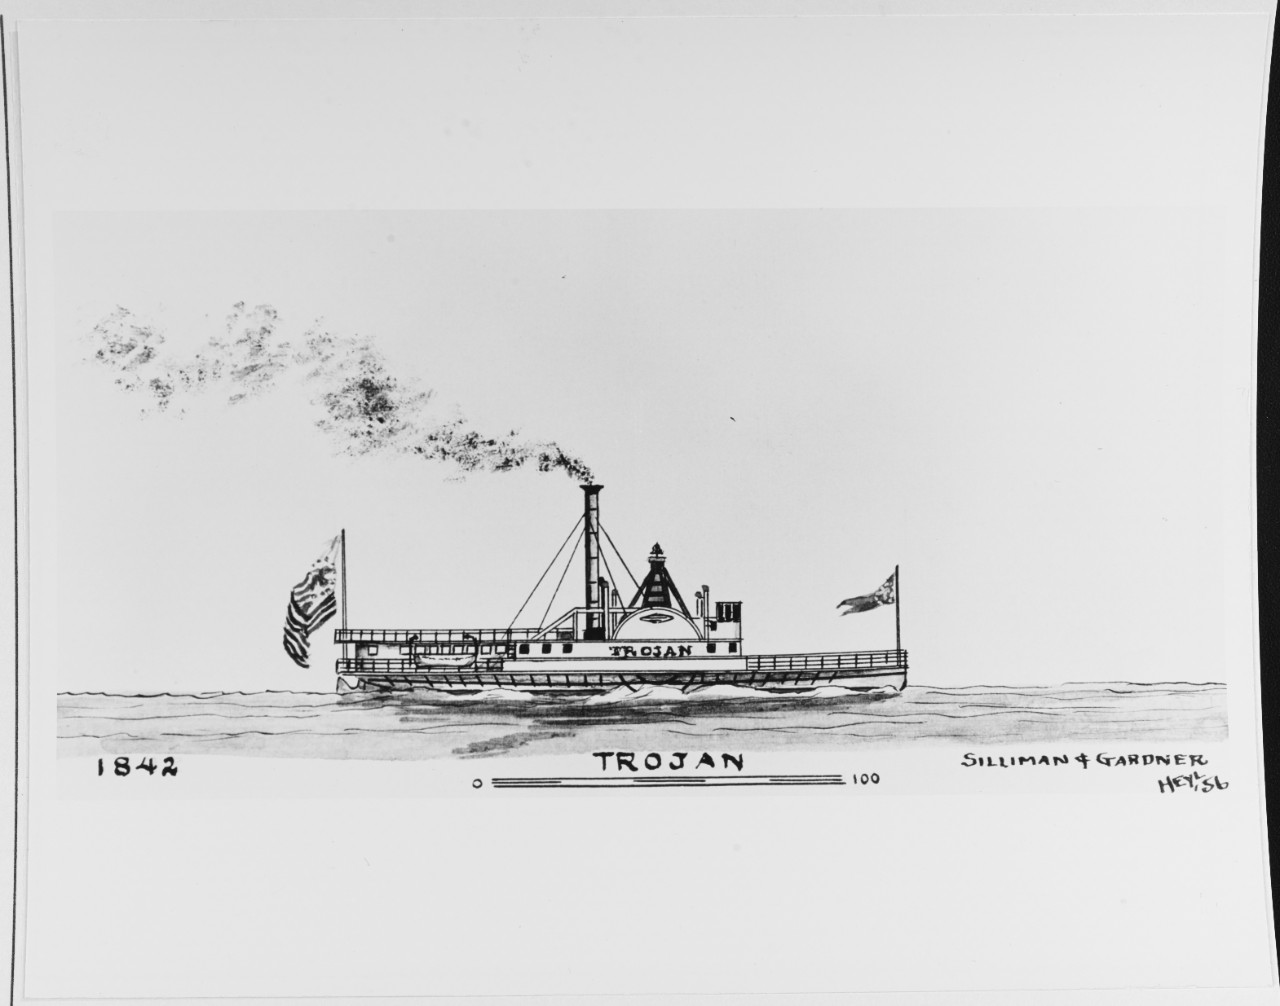 TROJAN (American Merchant Steamer, 1842-51)